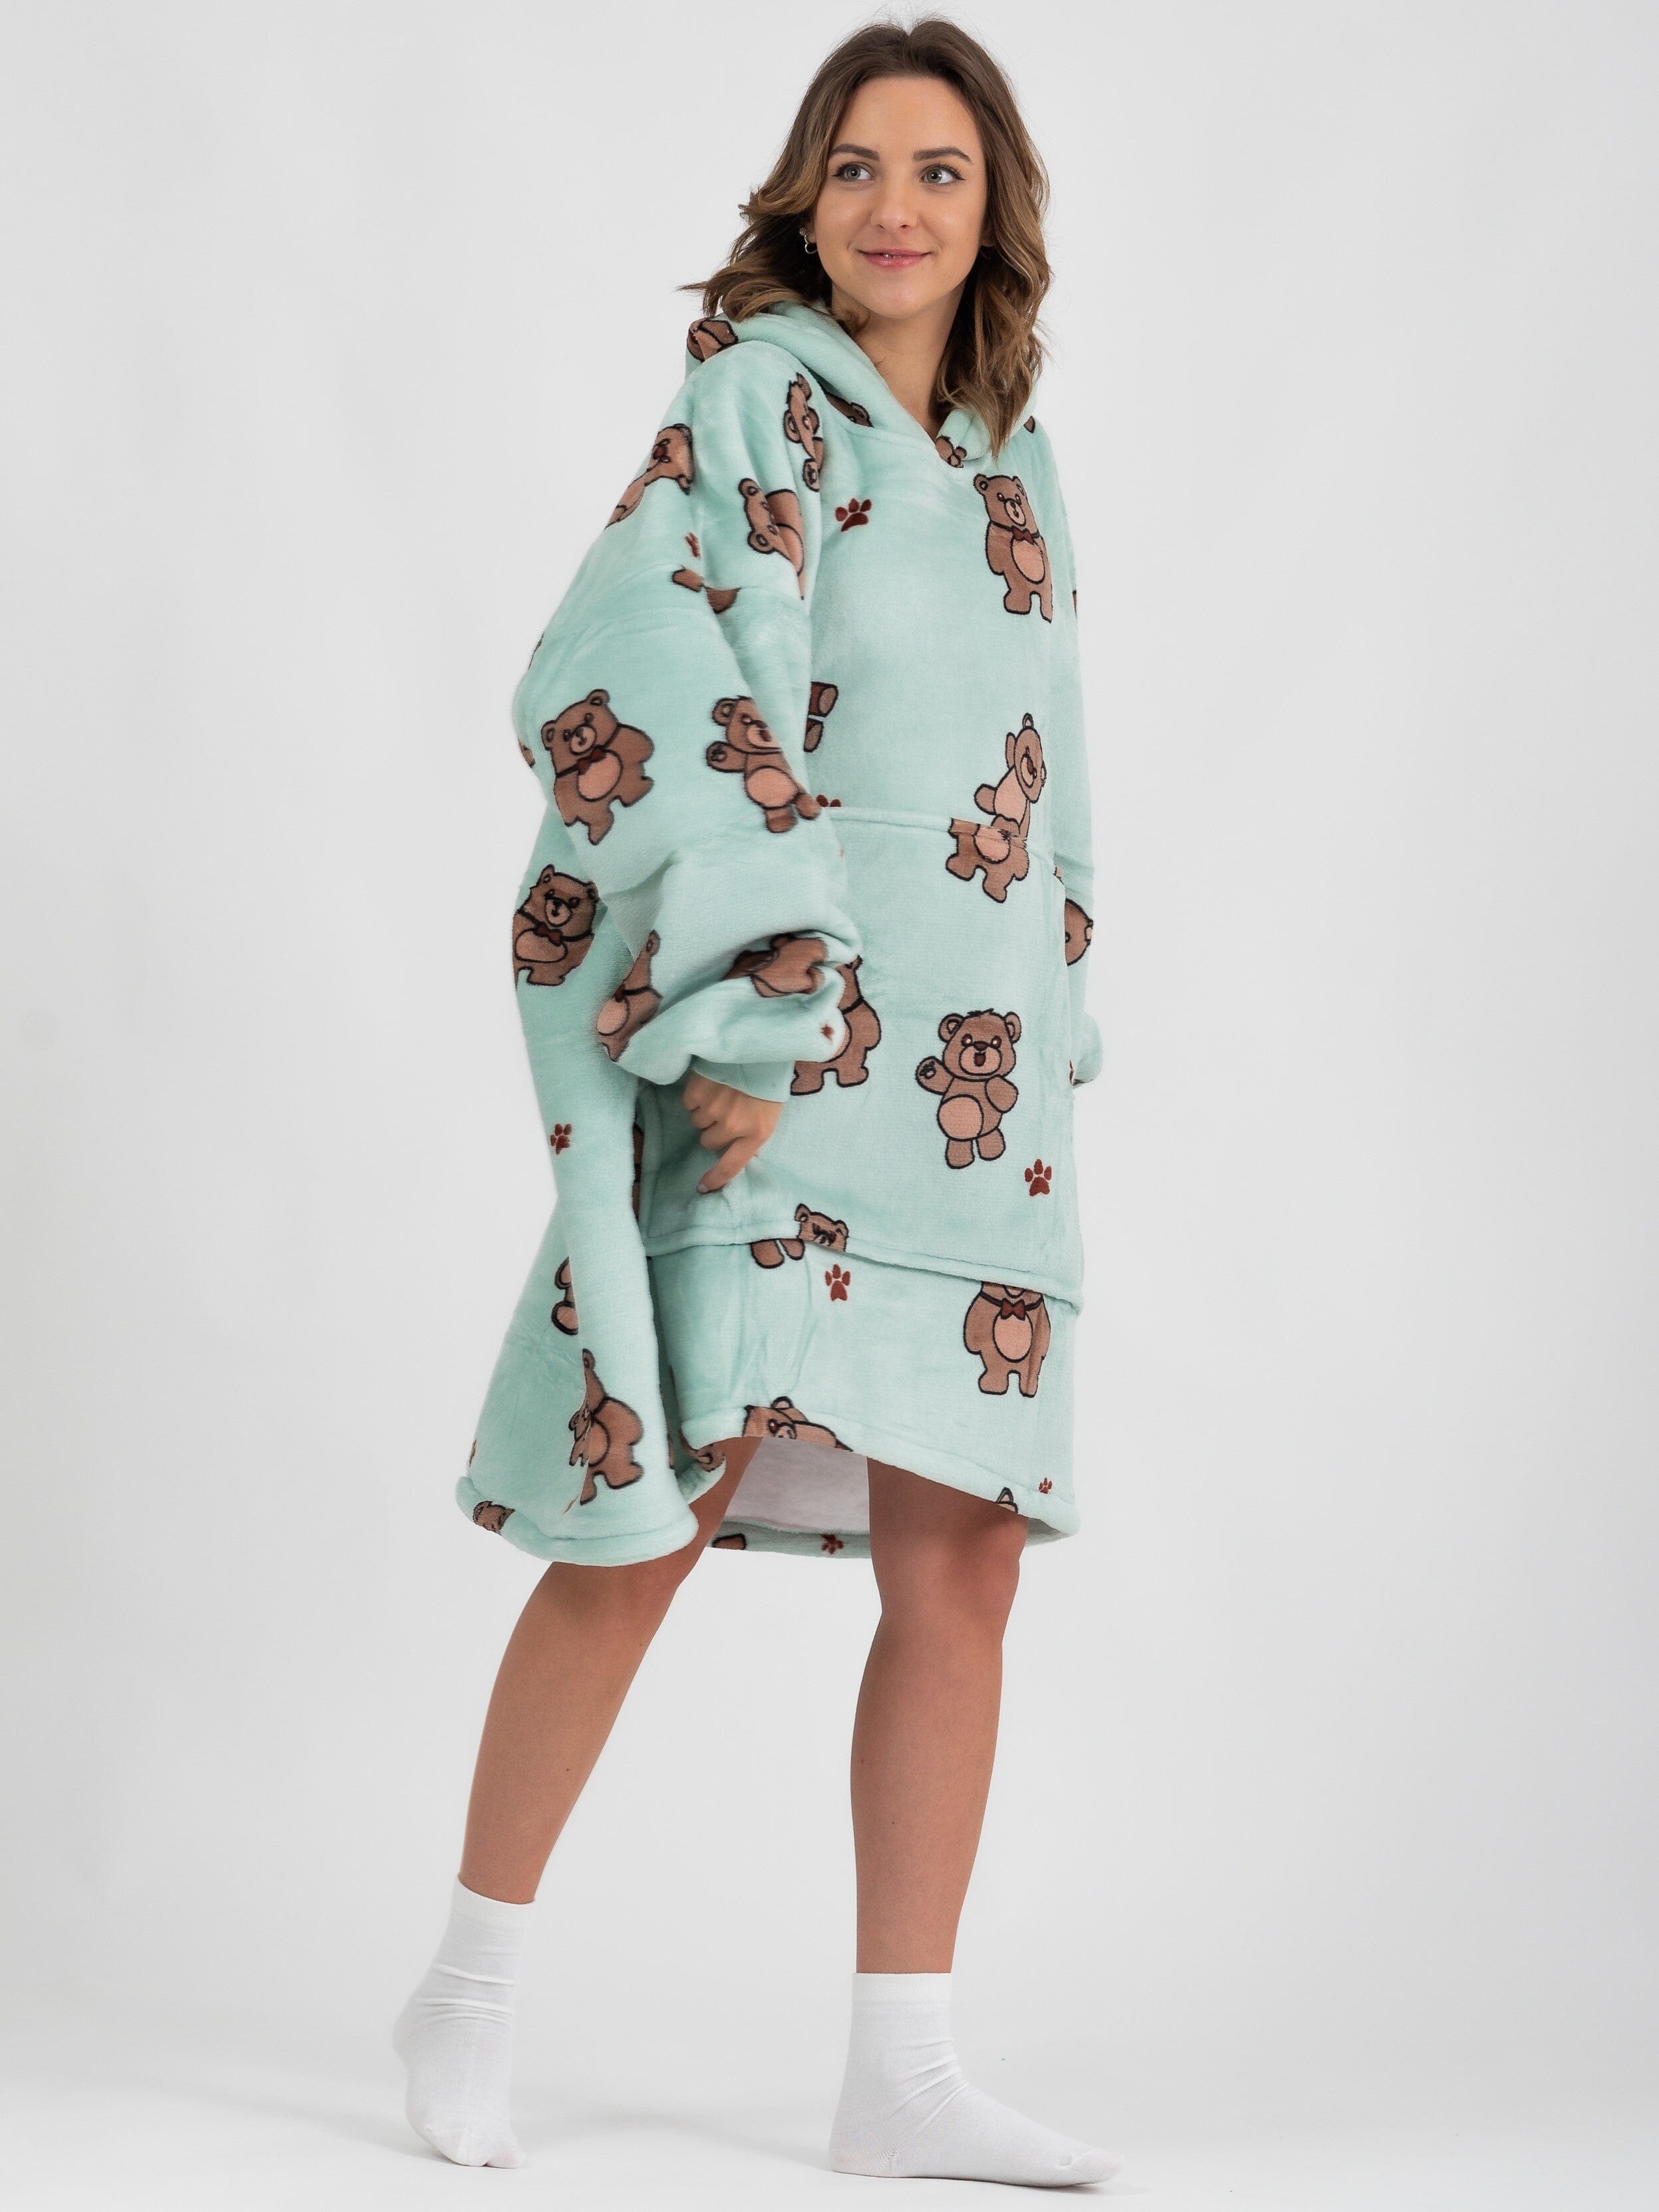 Pijama Cobertor Kawaii Ursinhos GatoGeek 